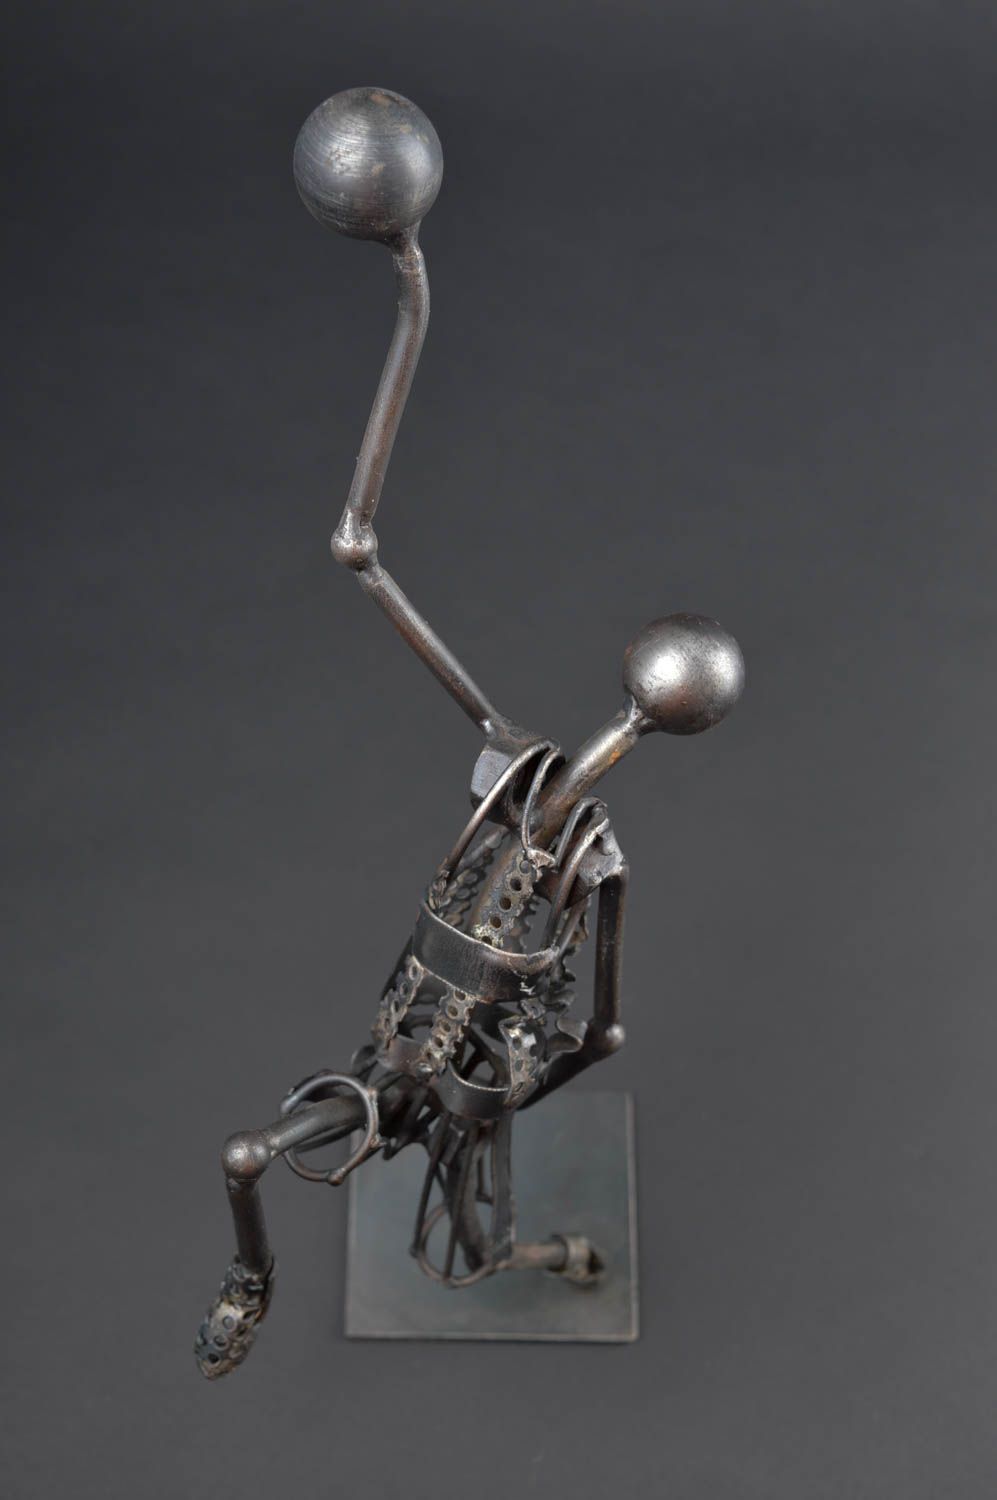 Handmade Deko Metall Figur ausgefallenes Geschenk Tischdeko Idee originell foto 1